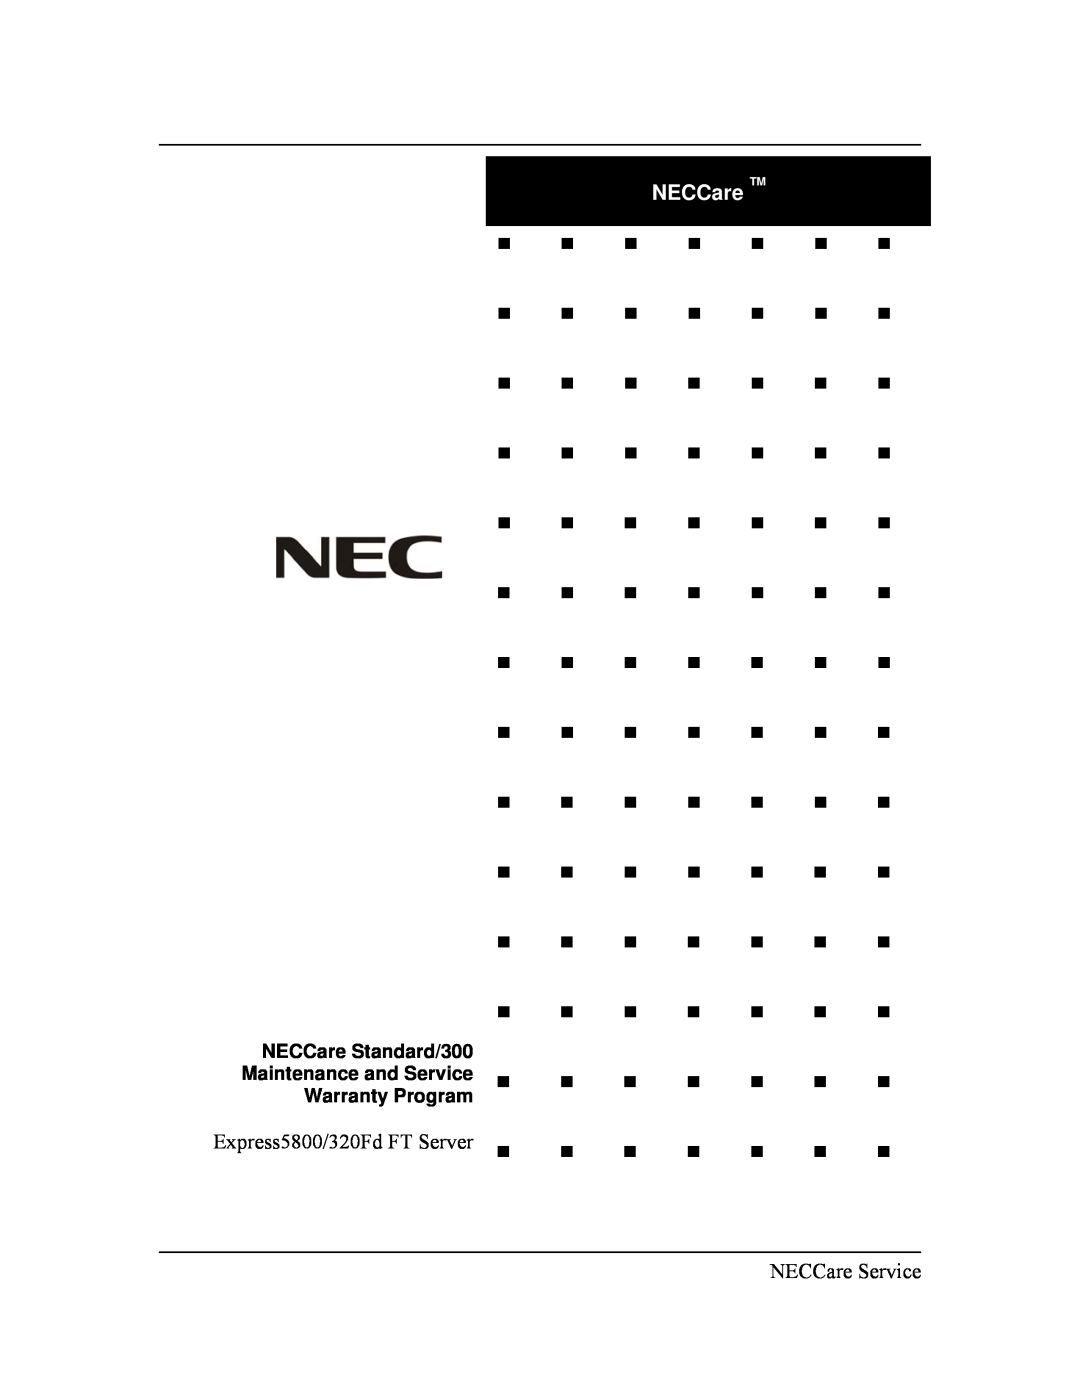 NEC Standard/300 warranty Express5800/320Fd FT Server, NECCare TM, NECCare Service, Warranty Program 